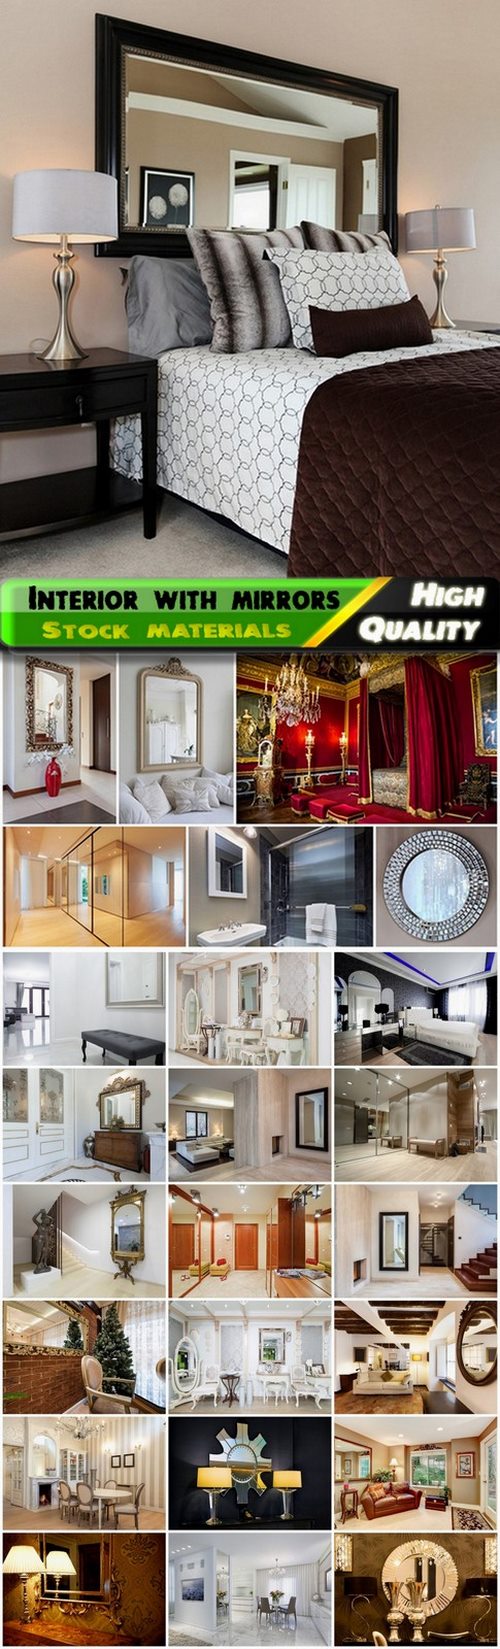 Creative home interior with mirrors - 25 HQ Jpg